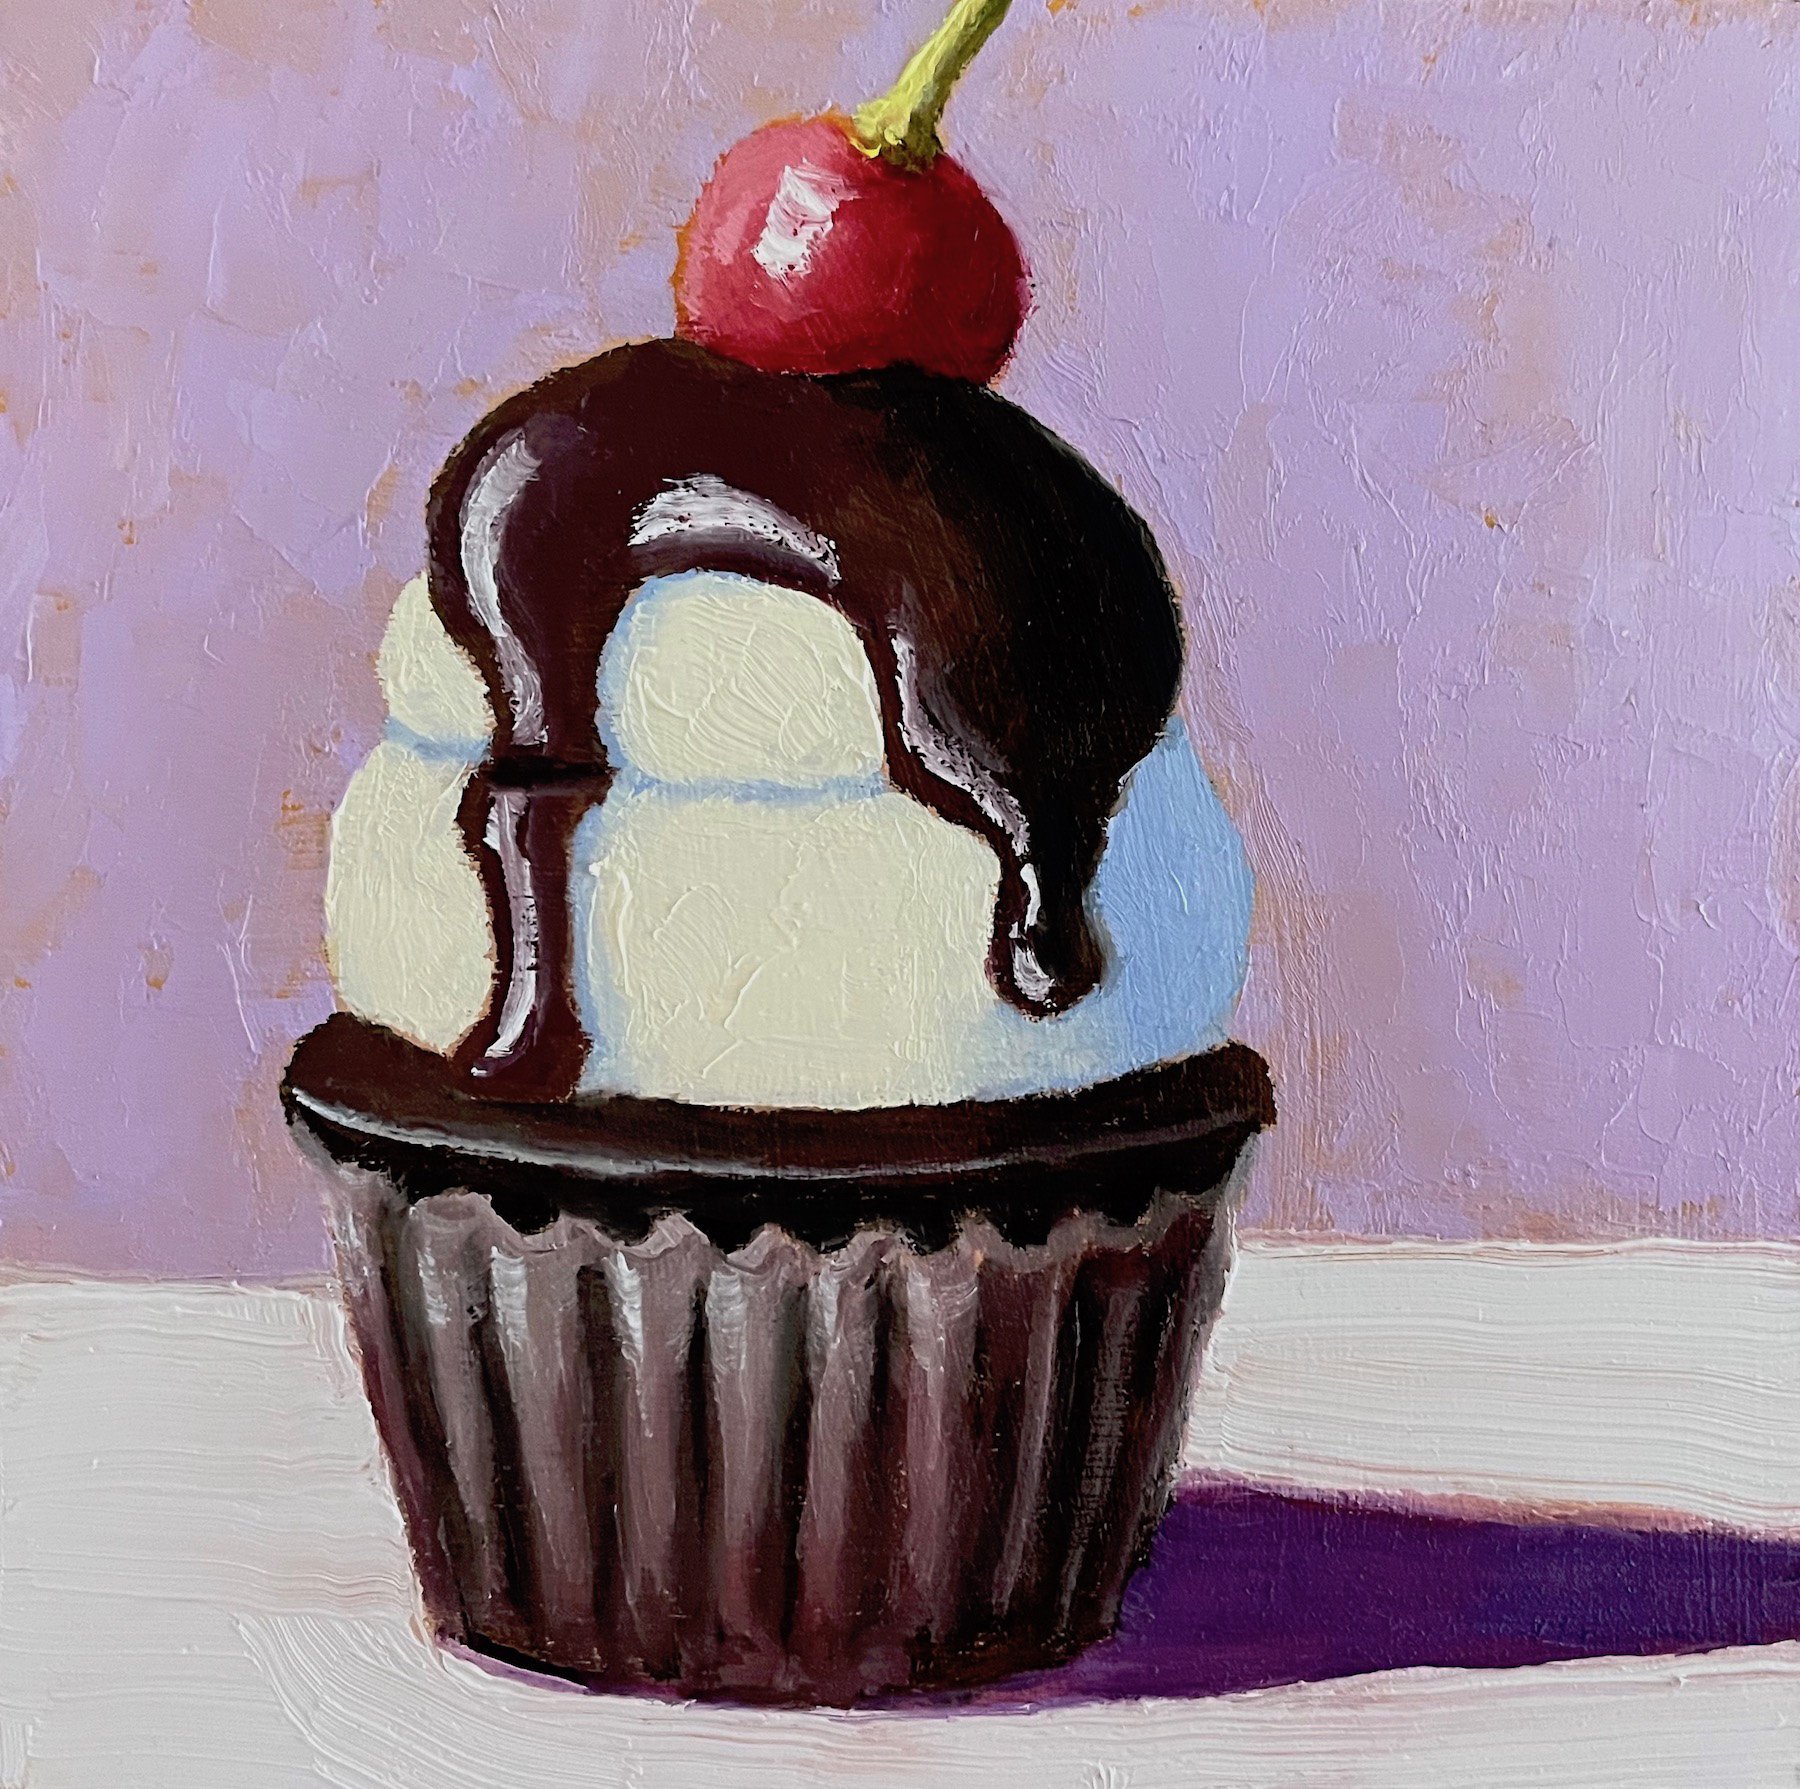 Chocolate Fudge Cupcake by Pat Doherty